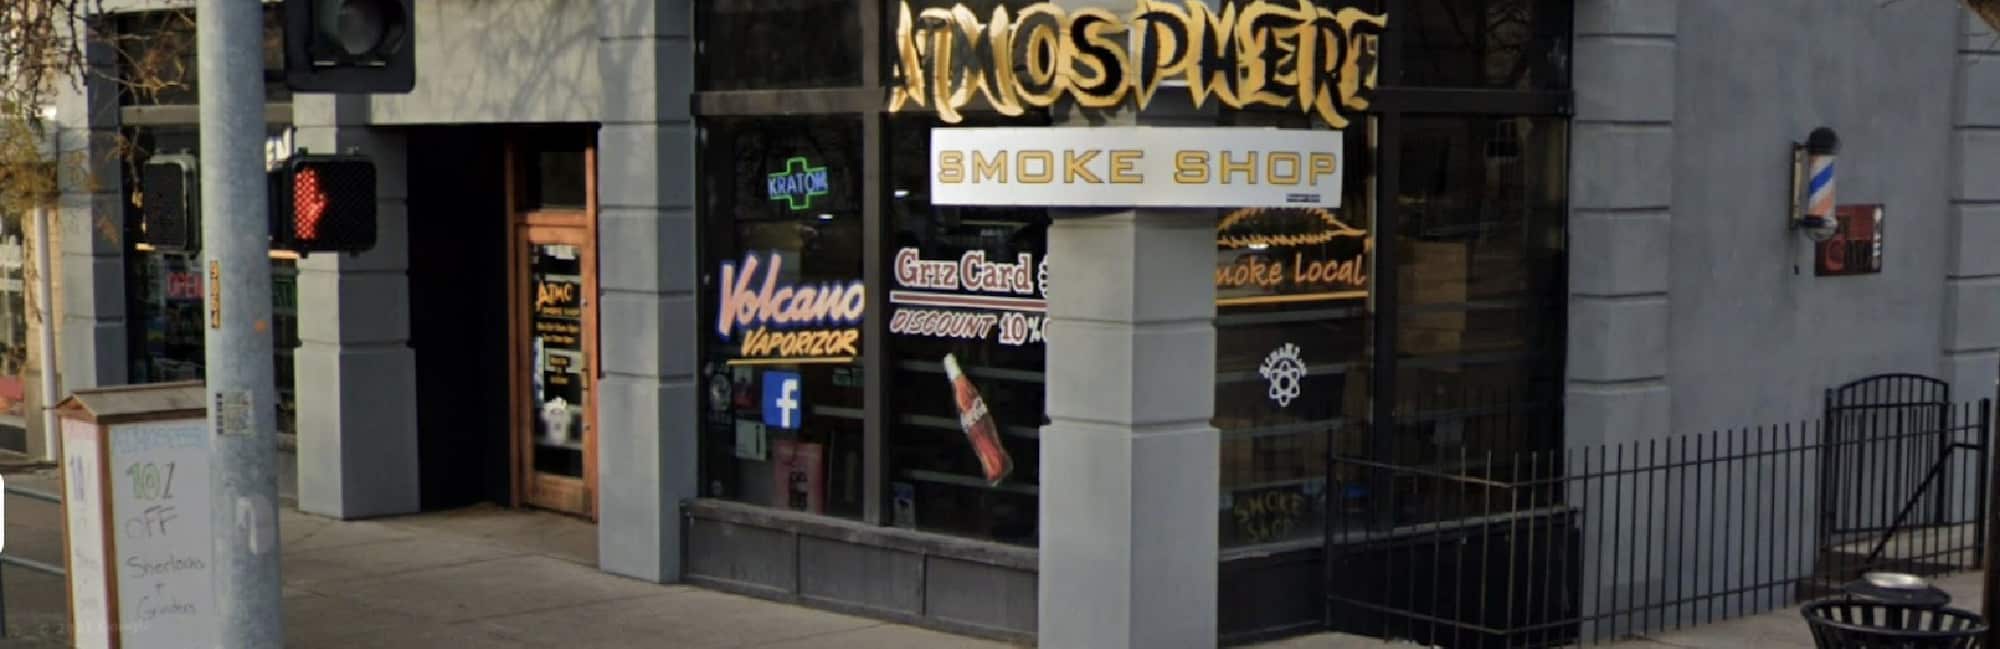 image of atmosphere smoke shop in missoula mt